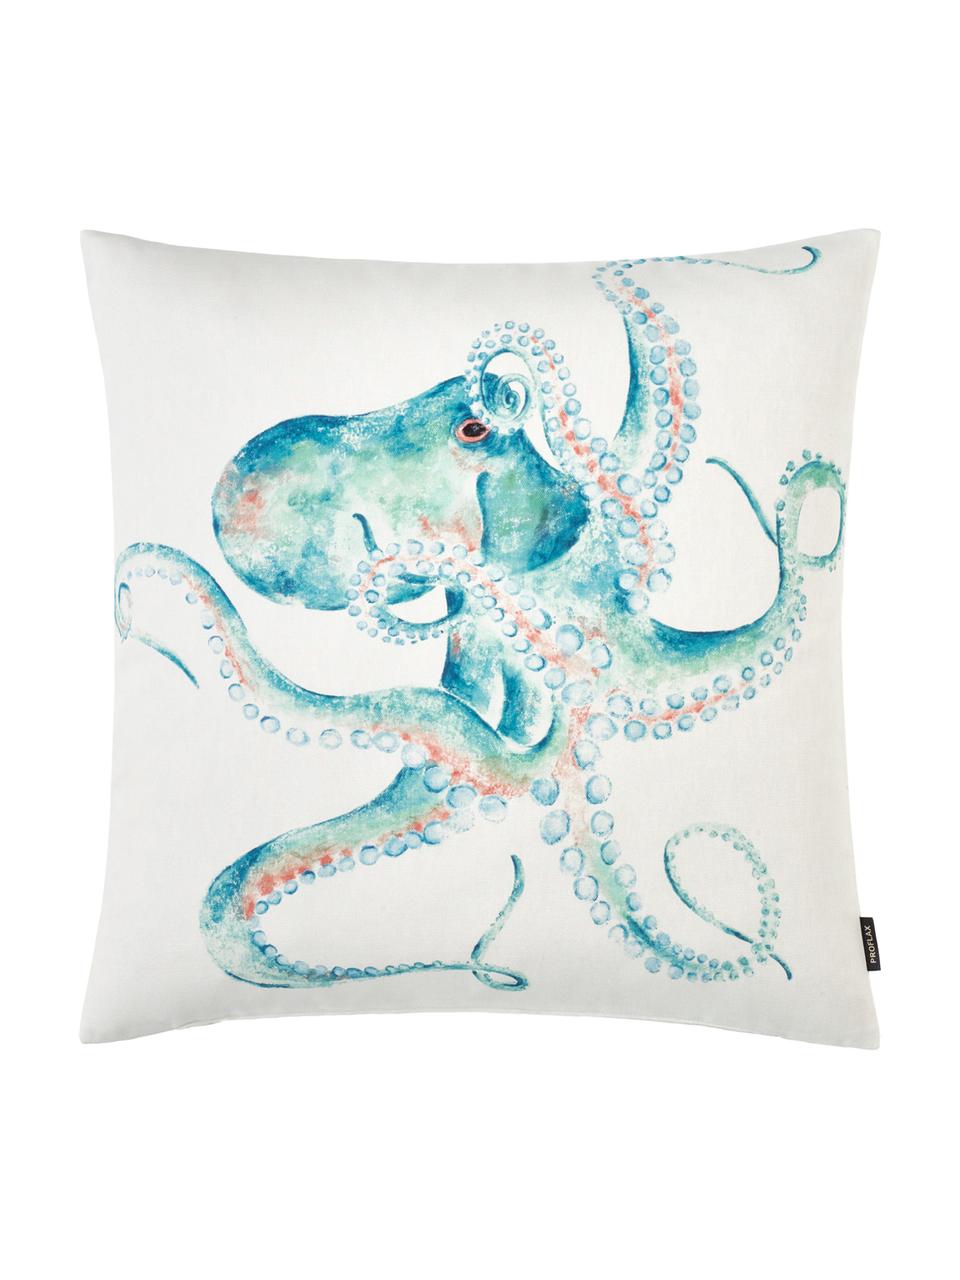 Kissenhülle Octopus, 100% Baumwolle, Weiss, Türkis, Rot, 50 x 50 cm